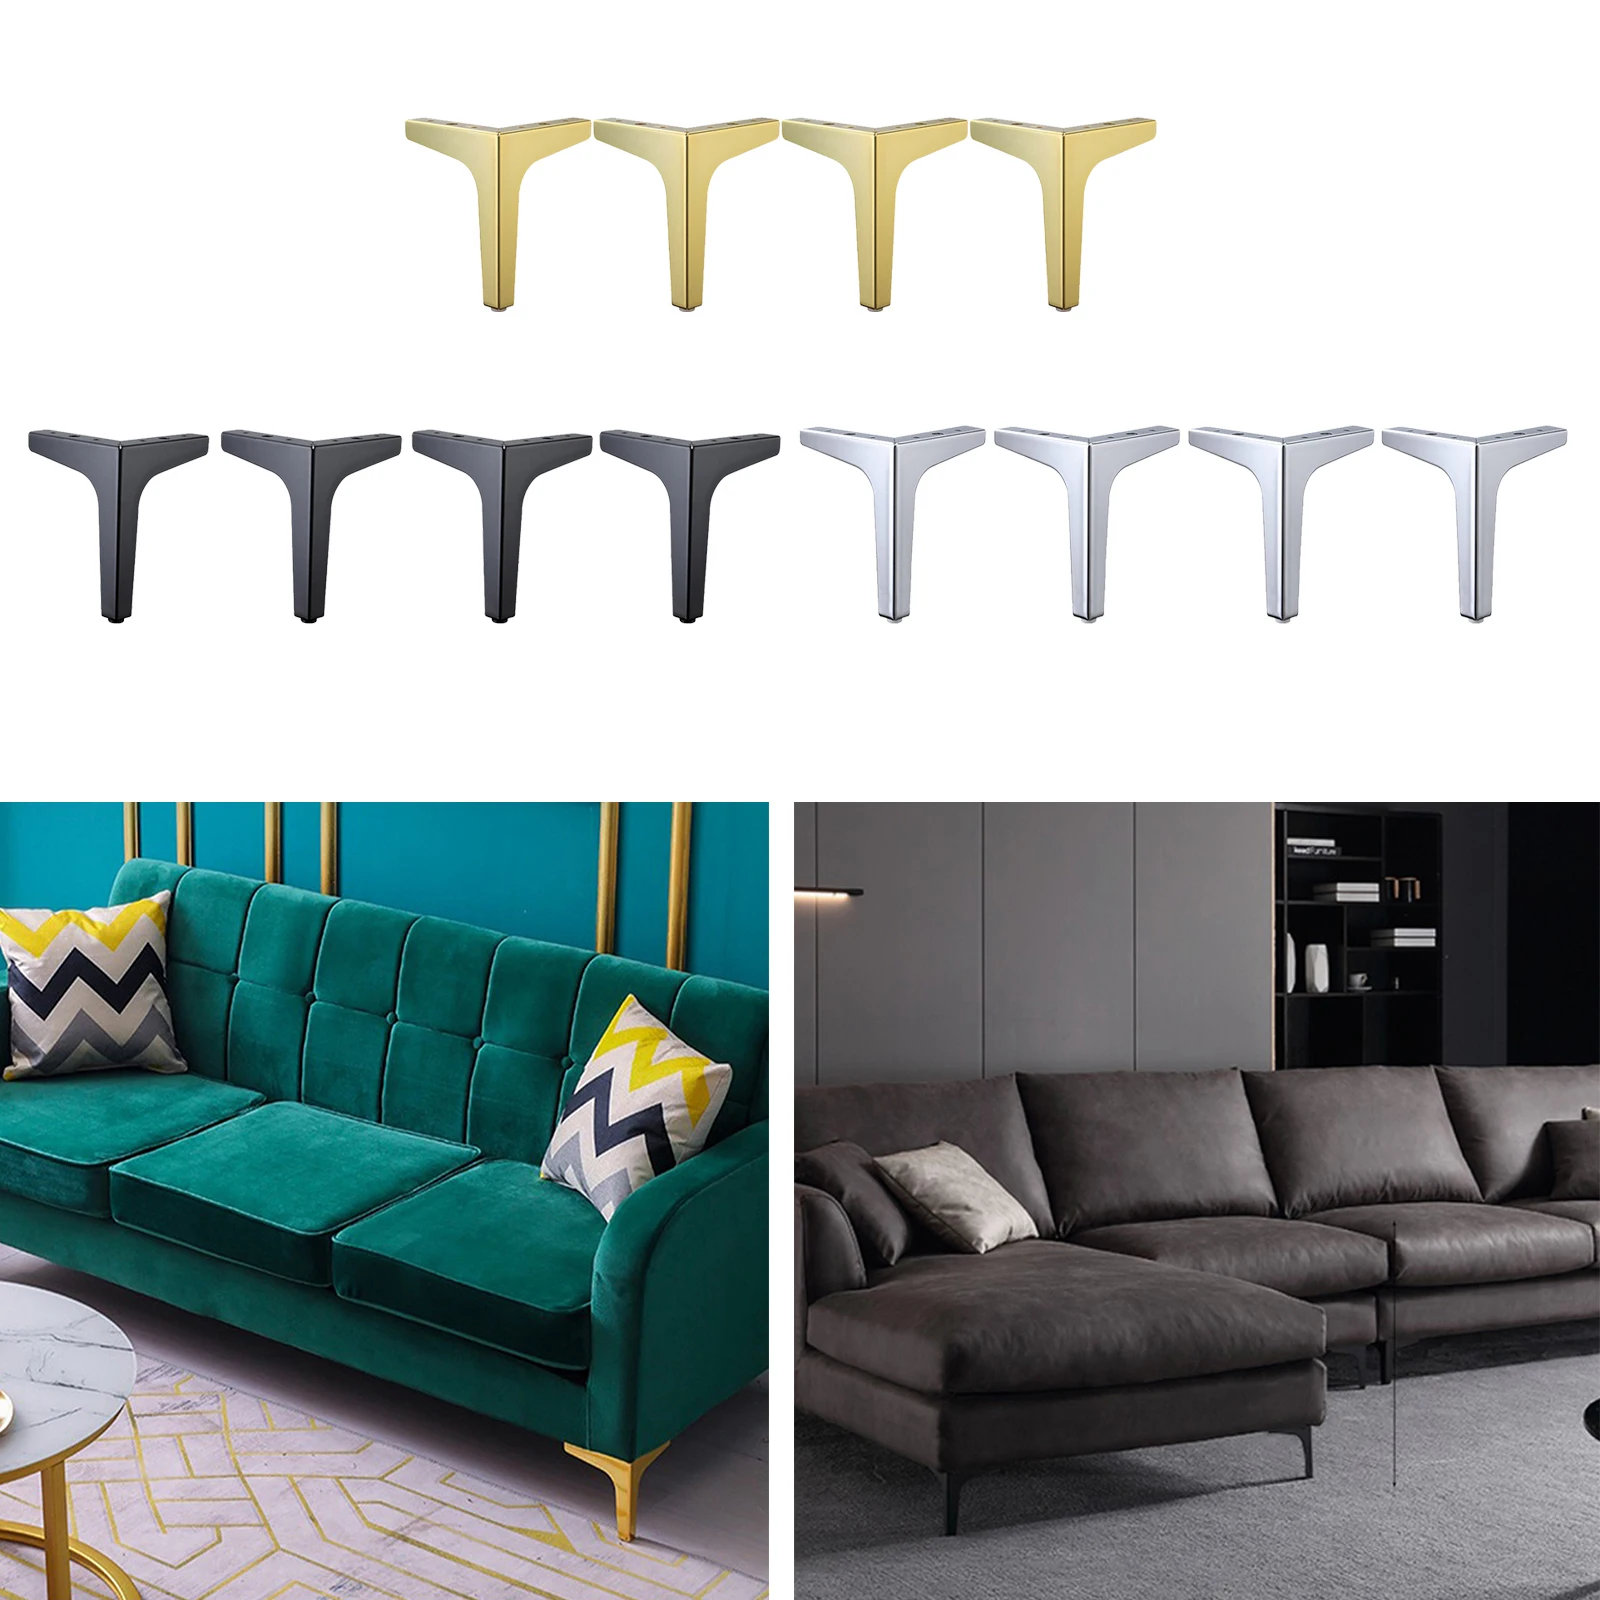 4 x Iron Metal Furniture Leg / Feet Metal Sofa feet Chair Cabinet stool table